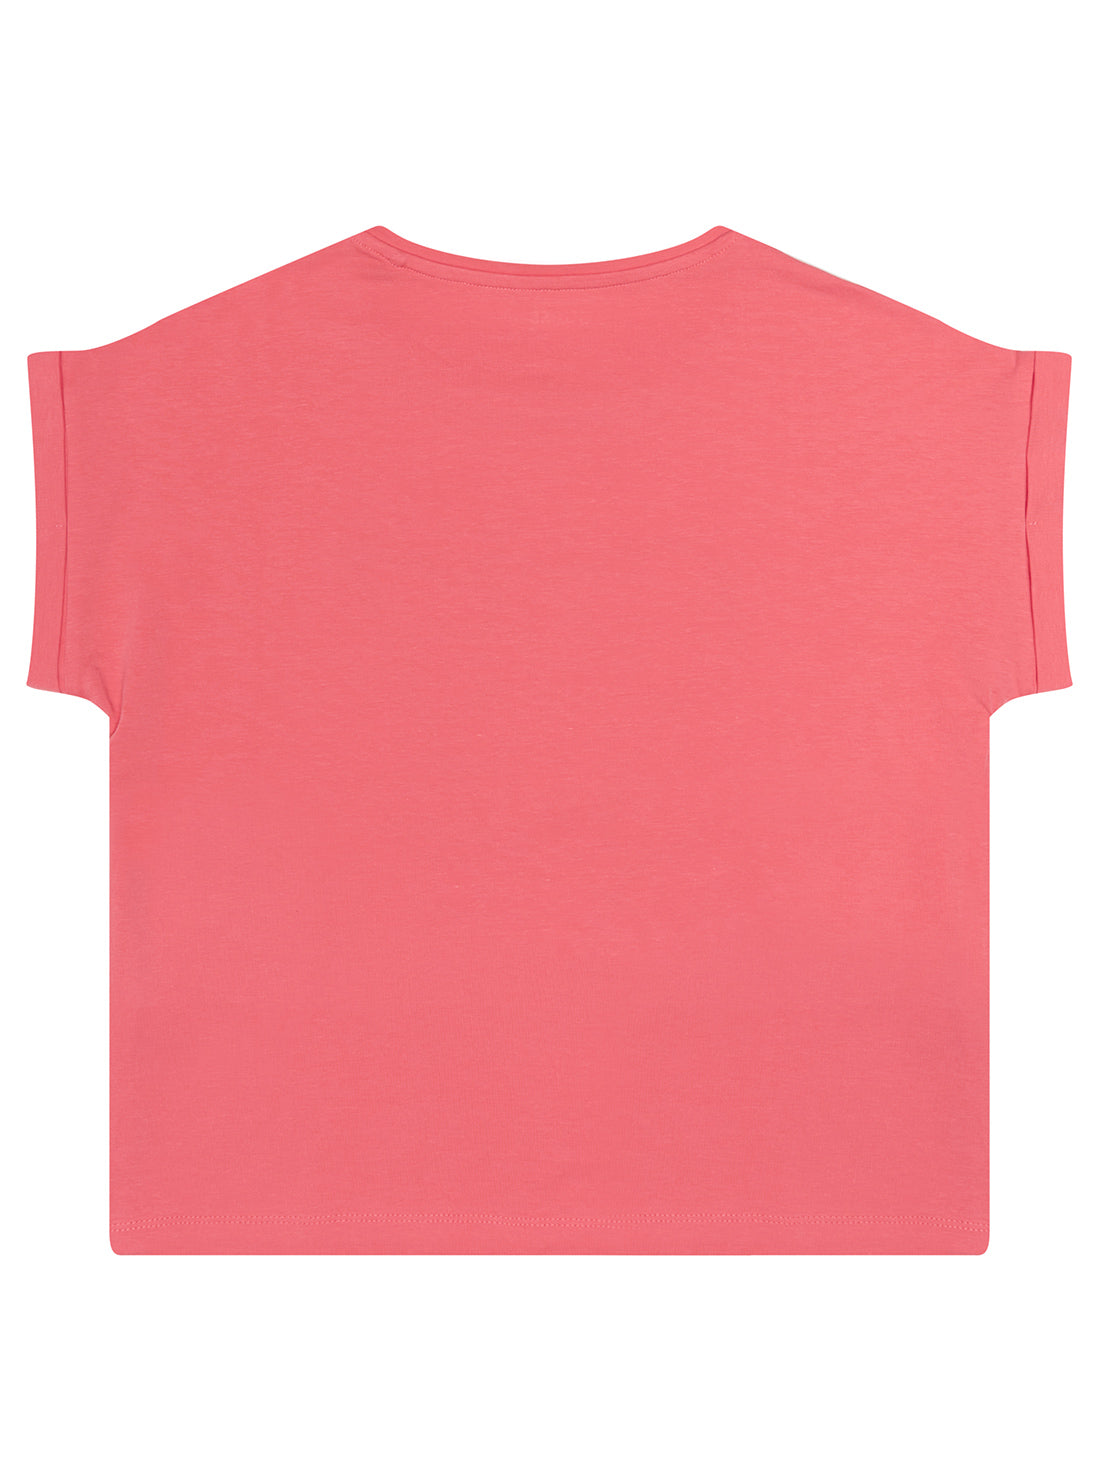 Girl's Pink Crystal Logo T-Shirt back view